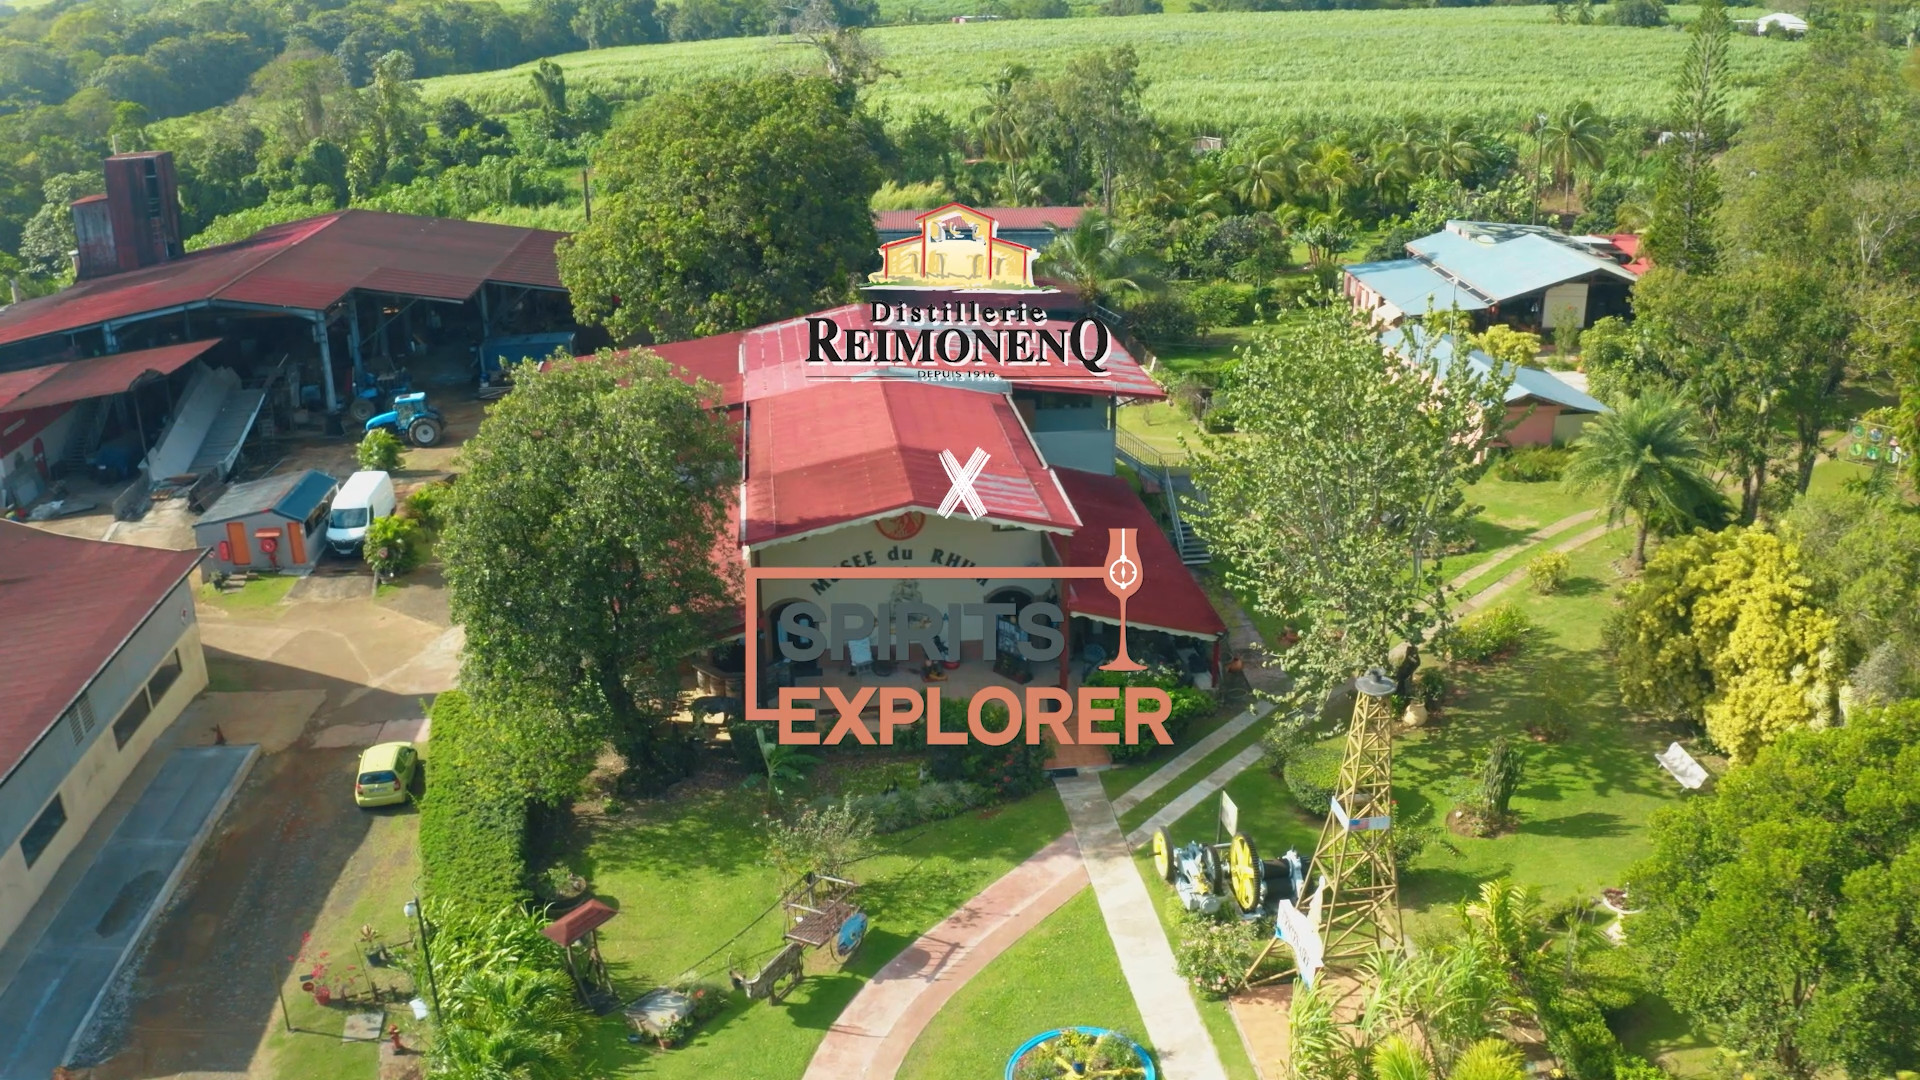 Spirits Explorer in Guadeloupe Episode 8 – Reimonenq distillery